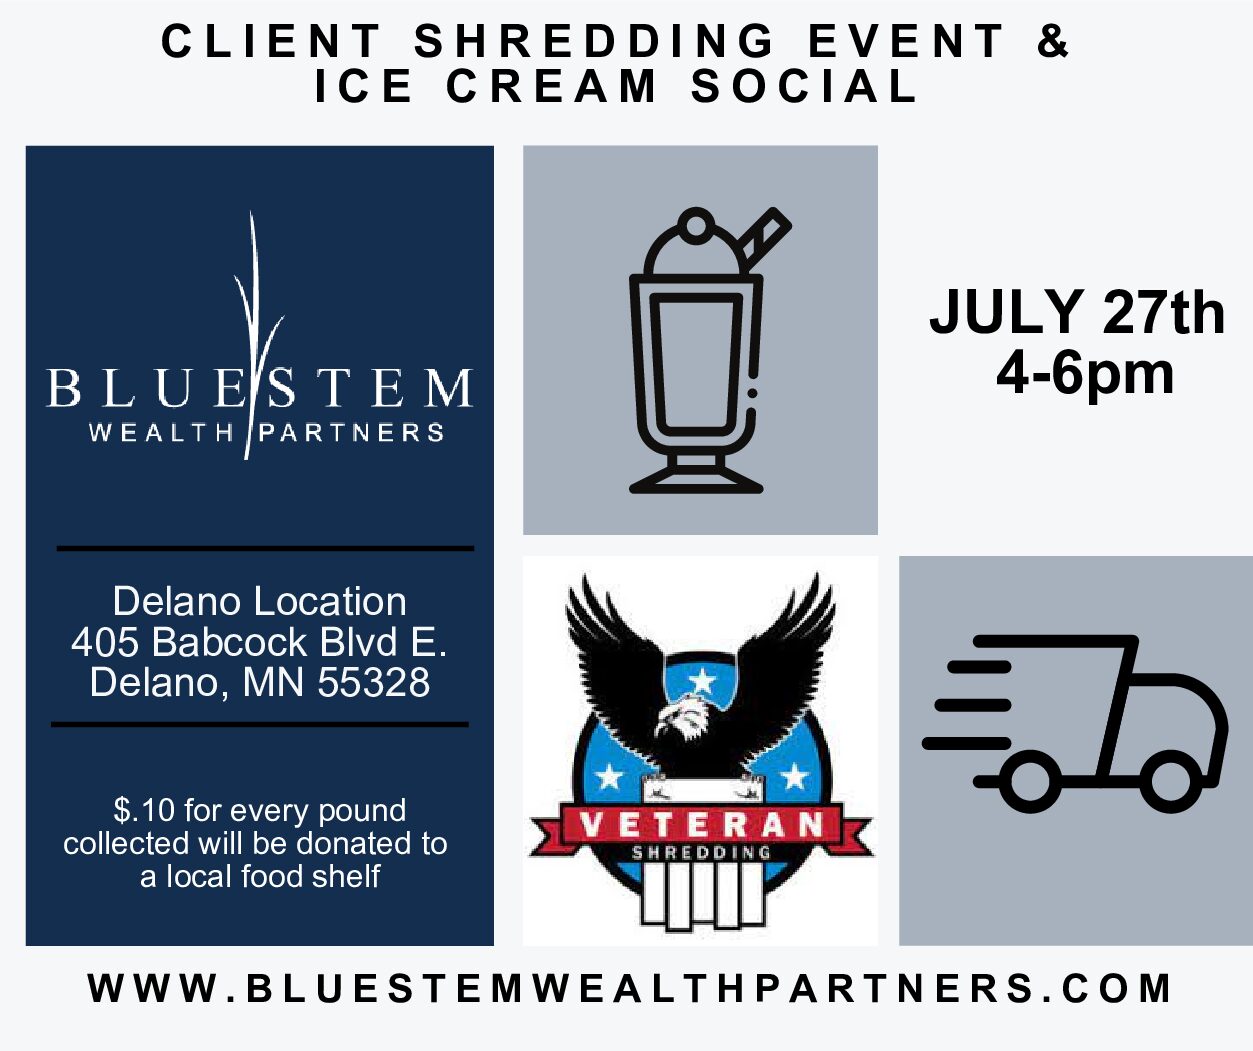 Delano Office Shredding Event – Thursday, July 27th